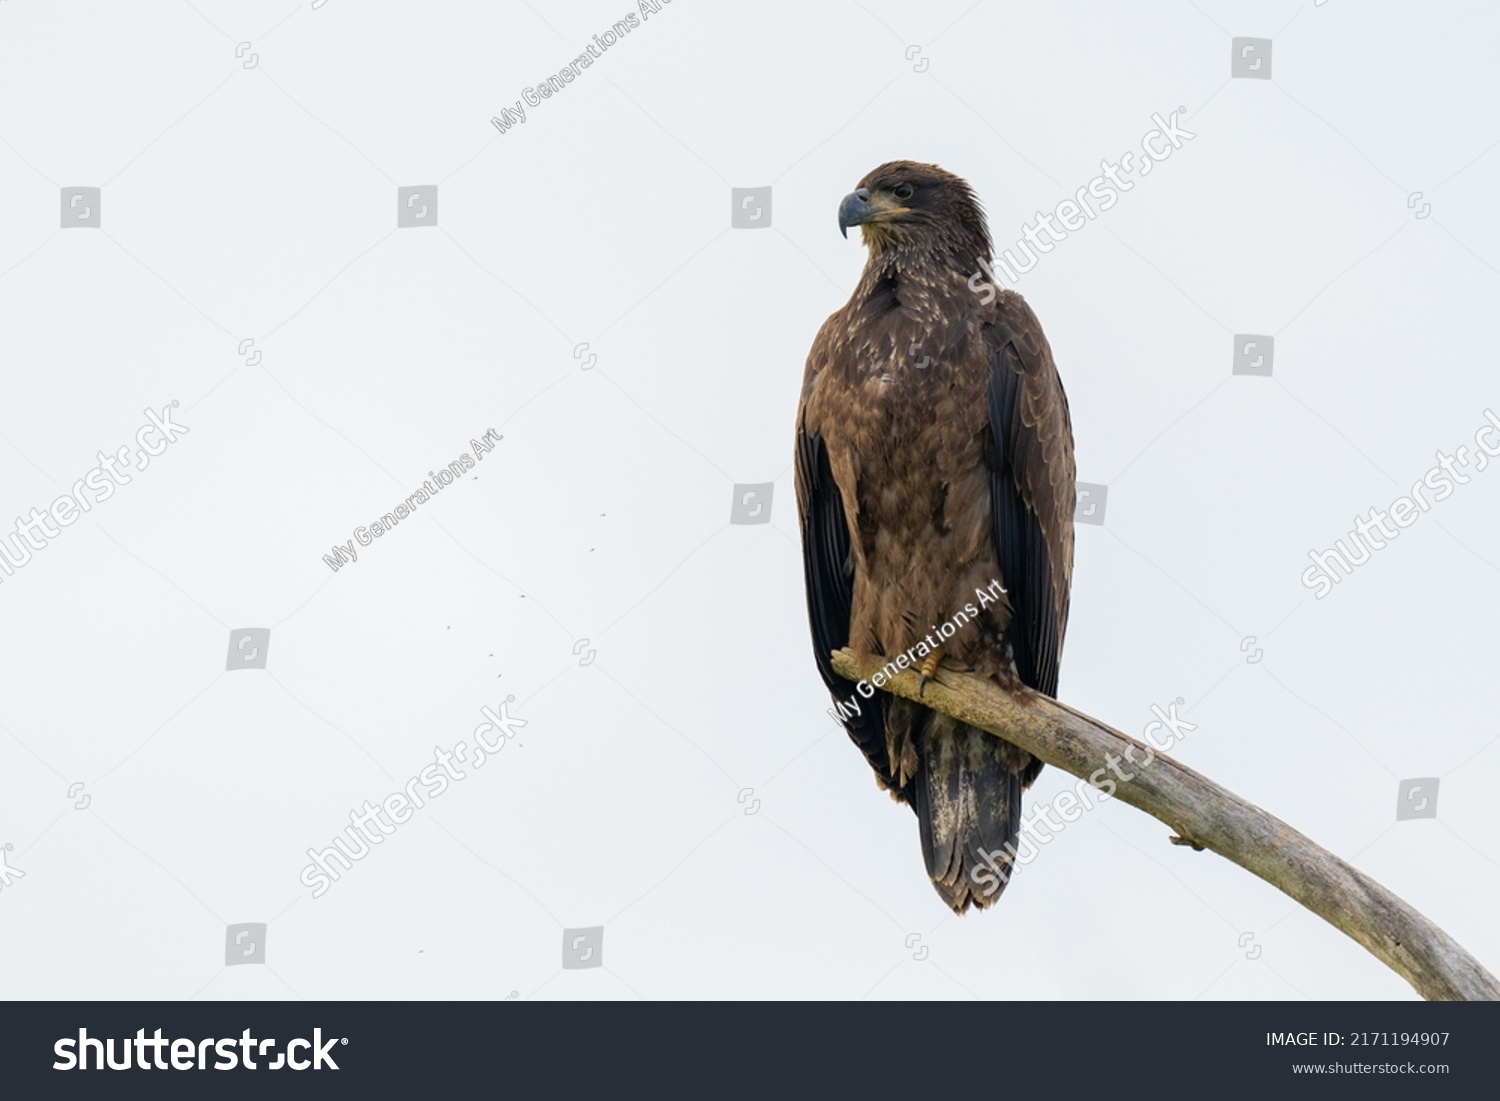 Perched Juvenile Bald Eagle on a Branch against a blue sky #2171194907